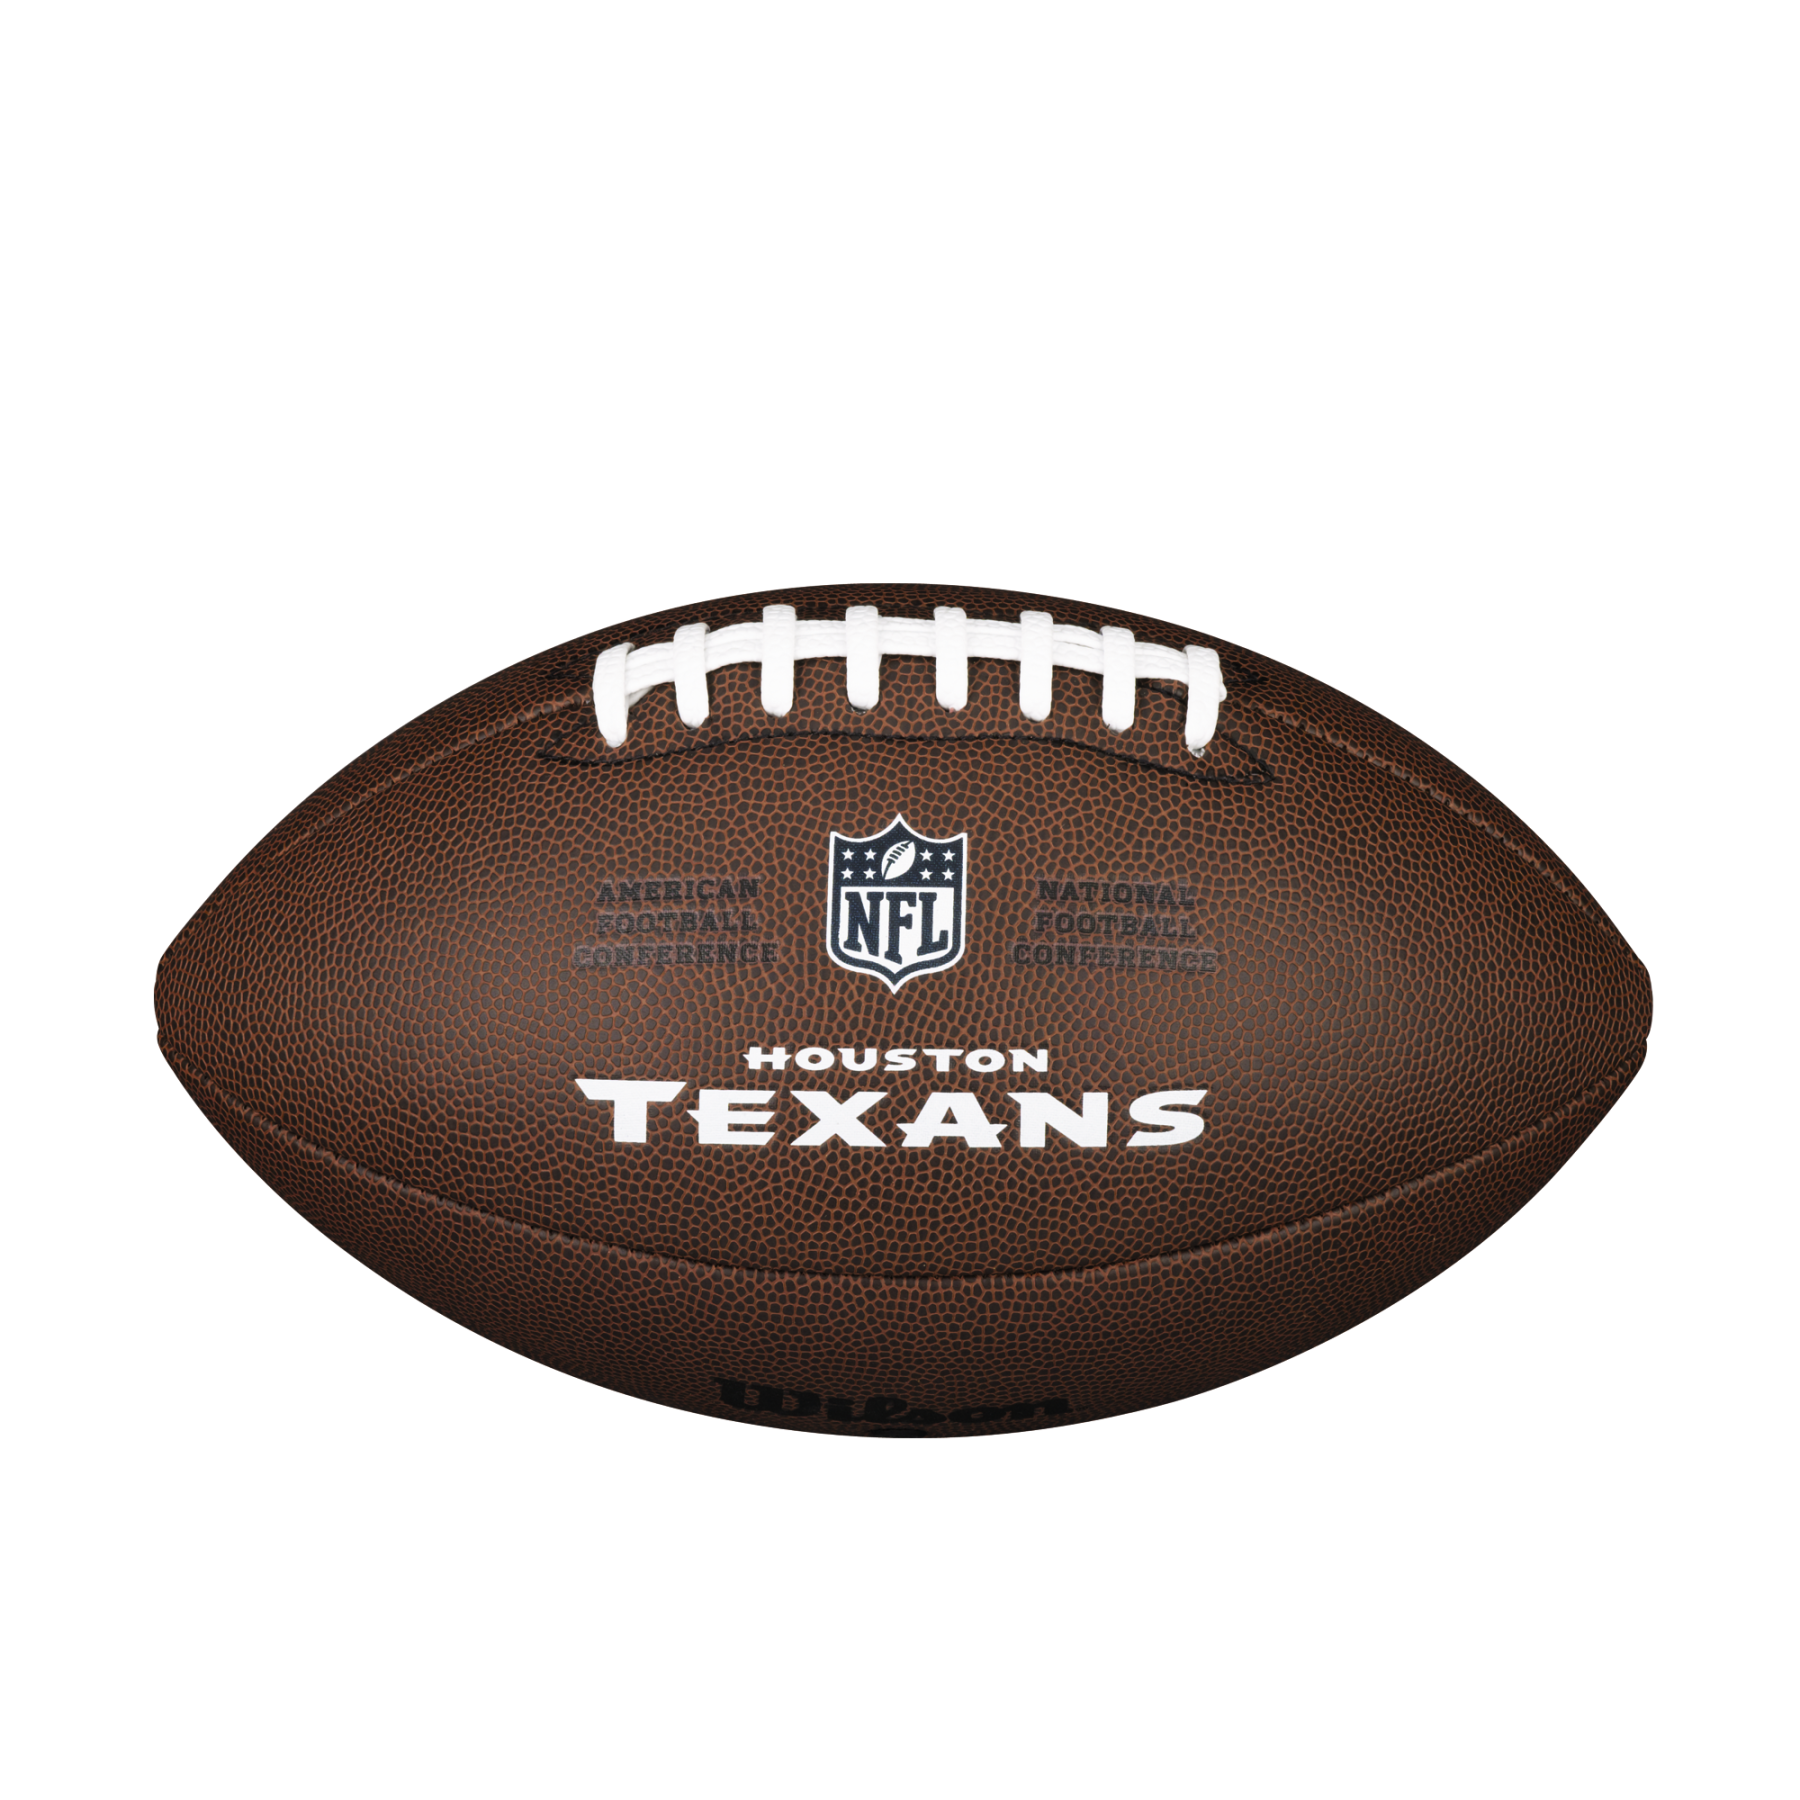 Wilson Texans NFL Licensed